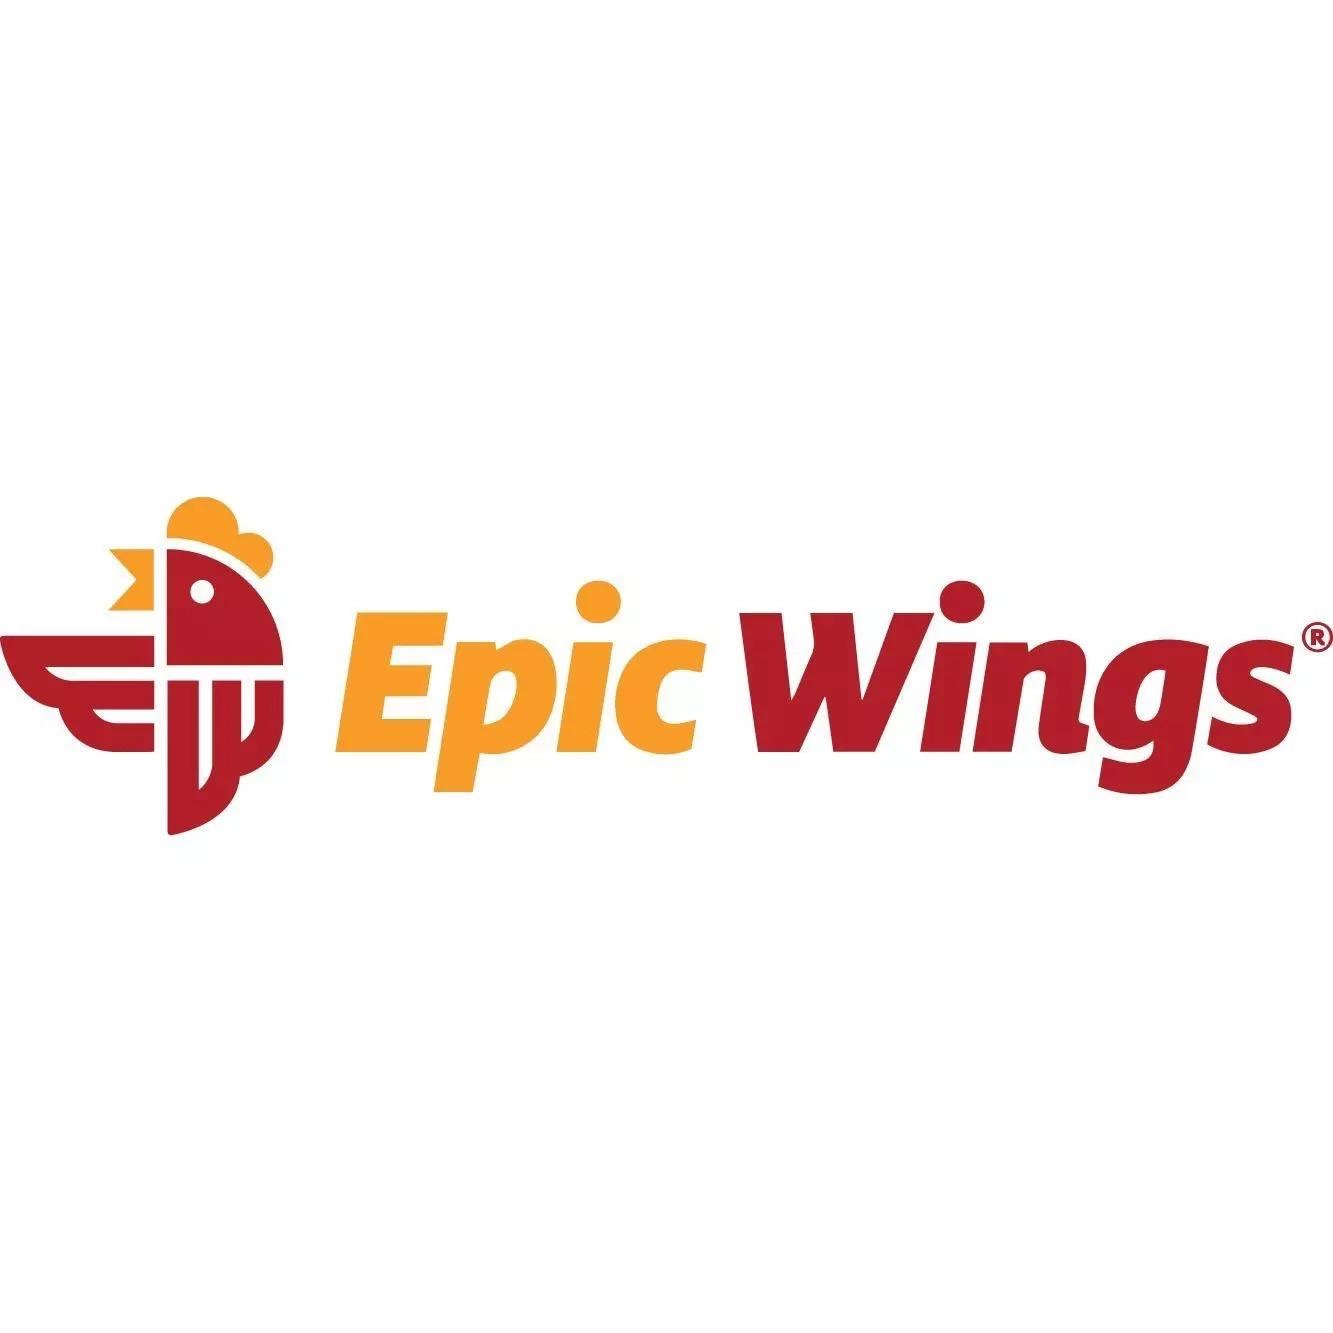 Epic Wings - Cudahy, CA 90201 - (323)284-1491 | ShowMeLocal.com